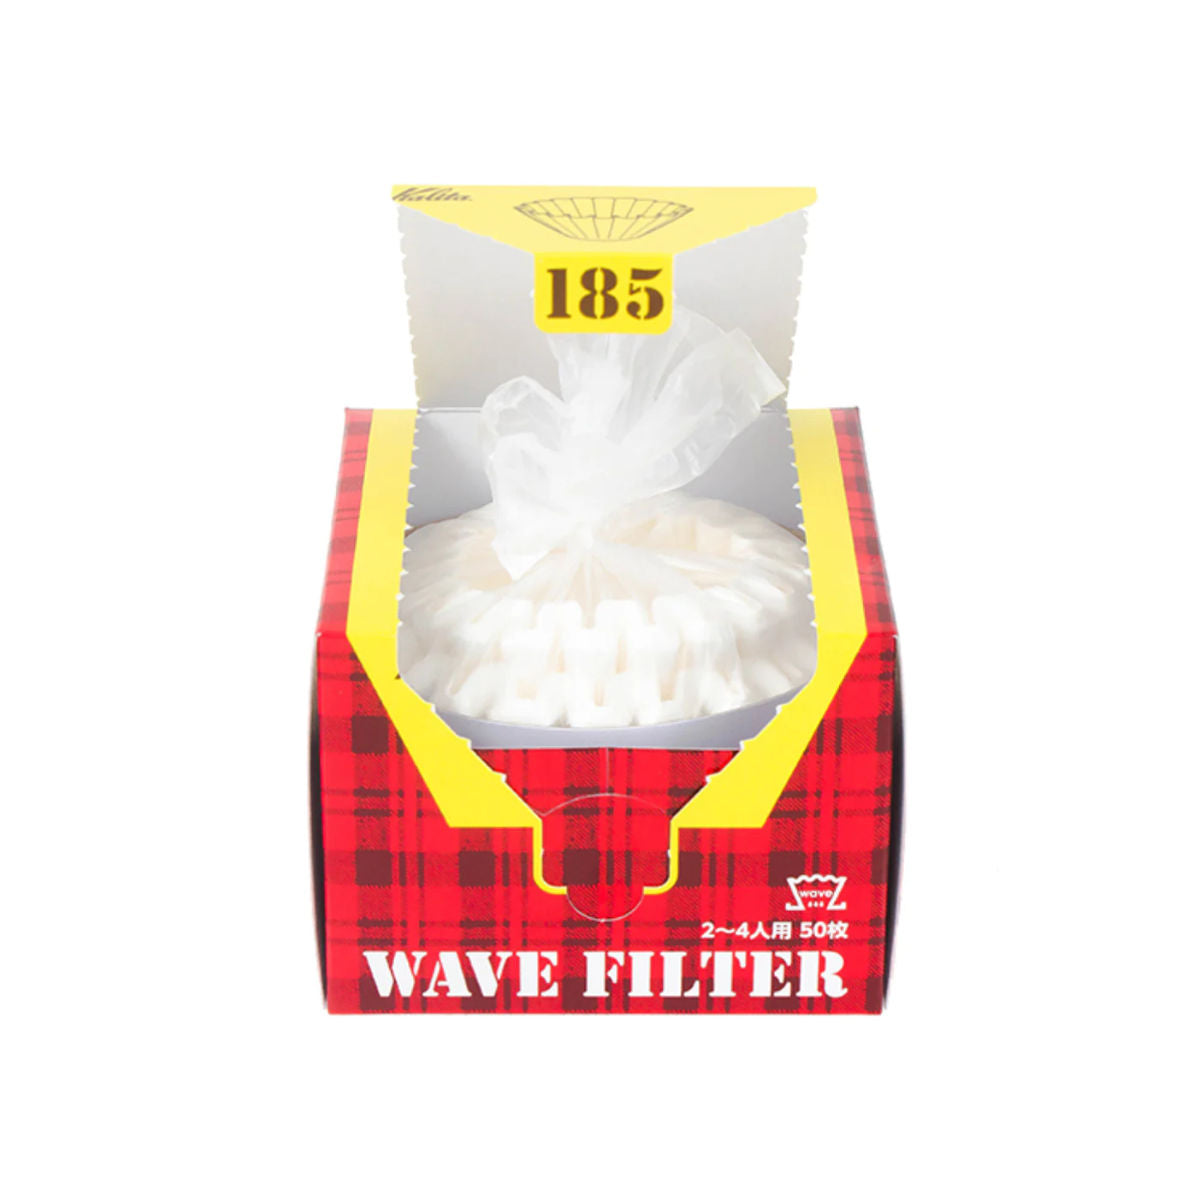 Kalita Wave 185 Filters (50 Pack)